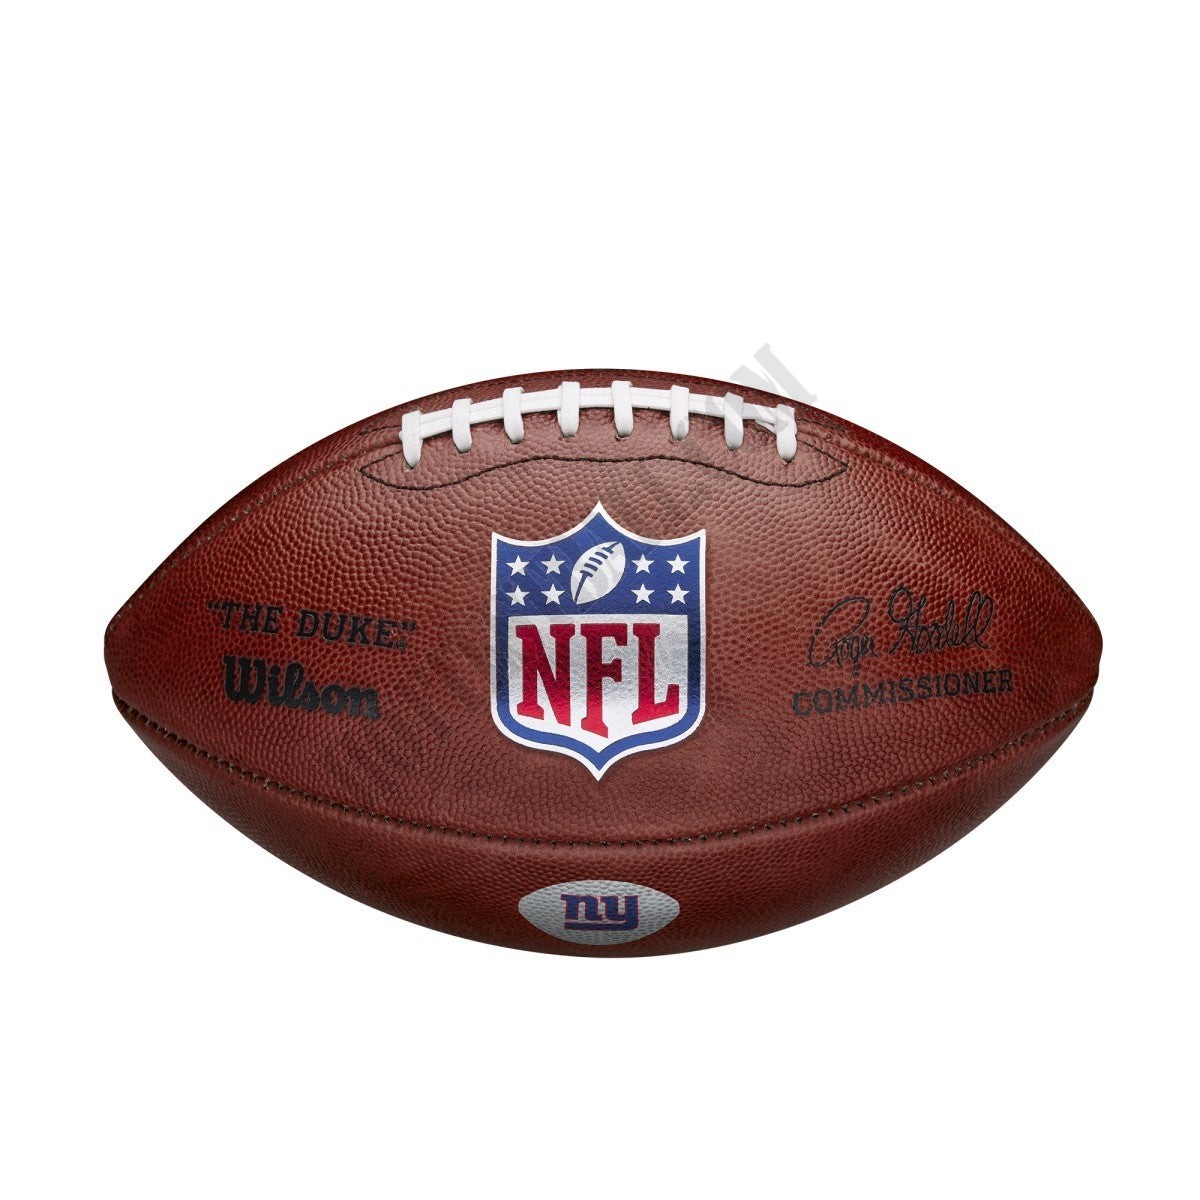 The Duke Decal NFL Football - New York Giants ● Wilson Promotions - -1